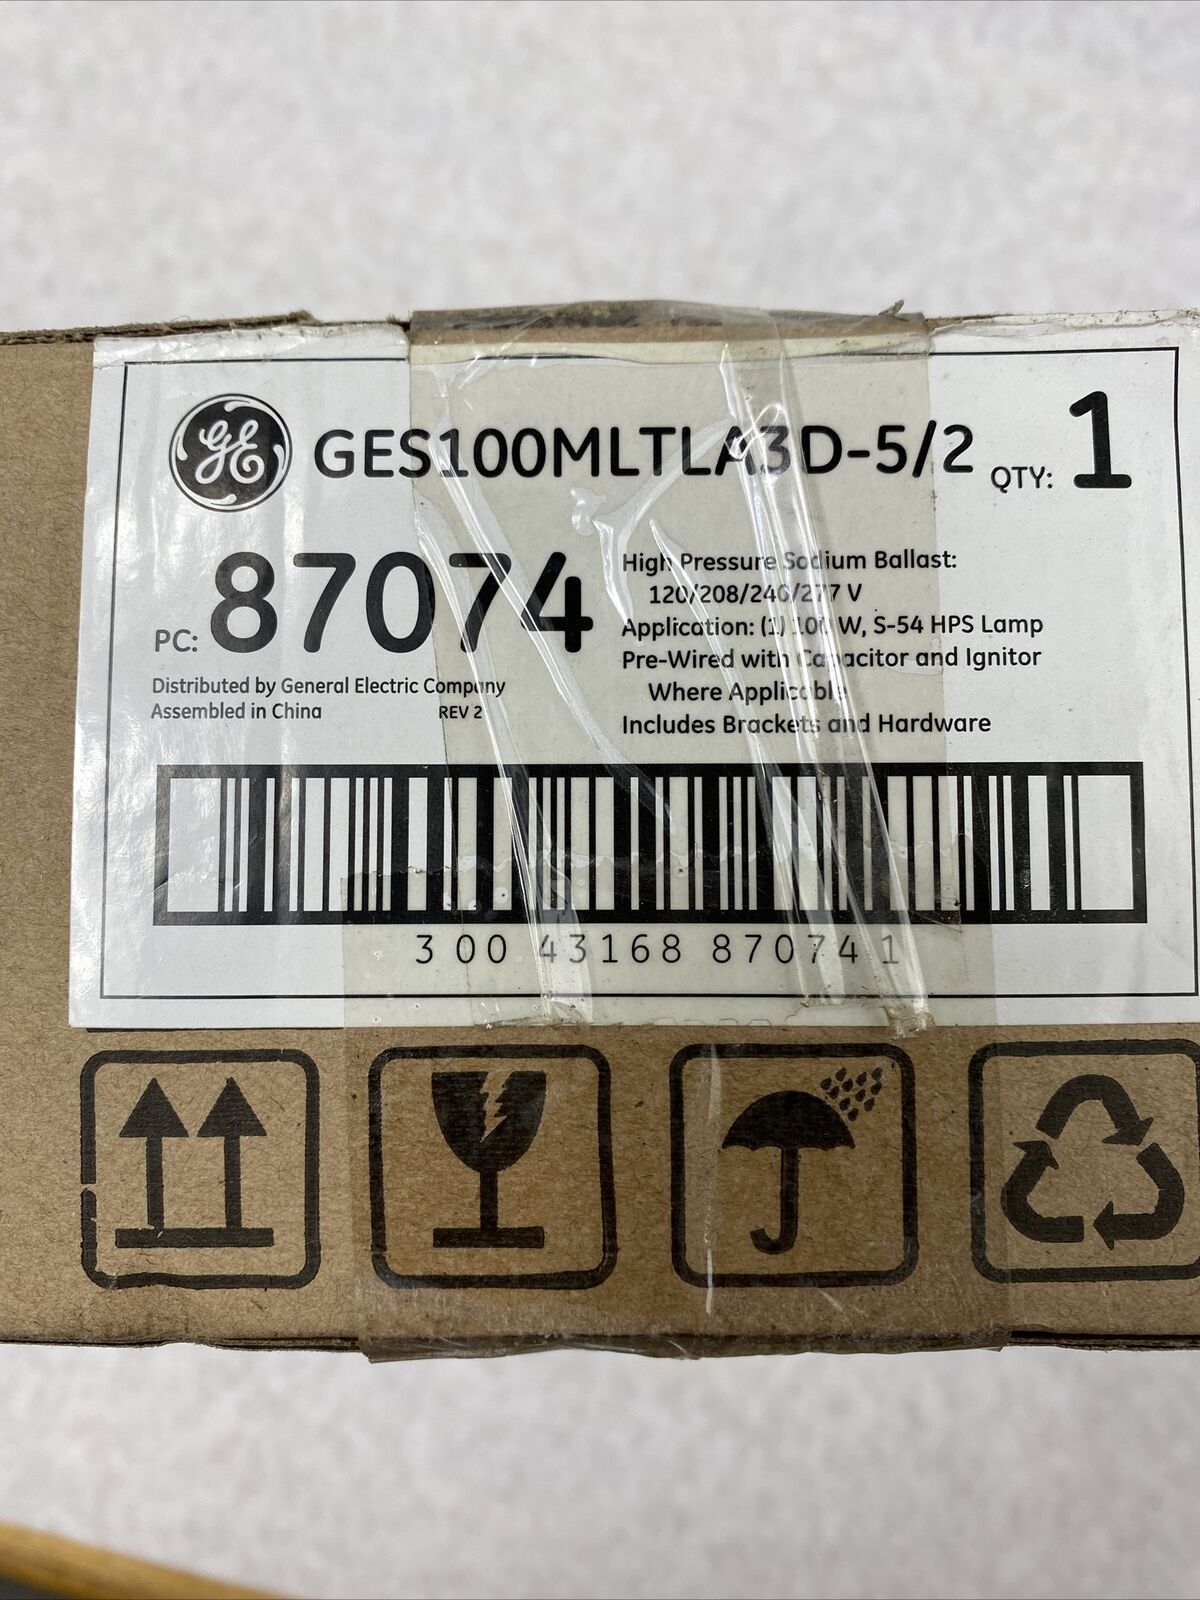 General Electric GES100MLTLA3D-5/2 High Pressure Sodium Ballast 120/208/240/277V